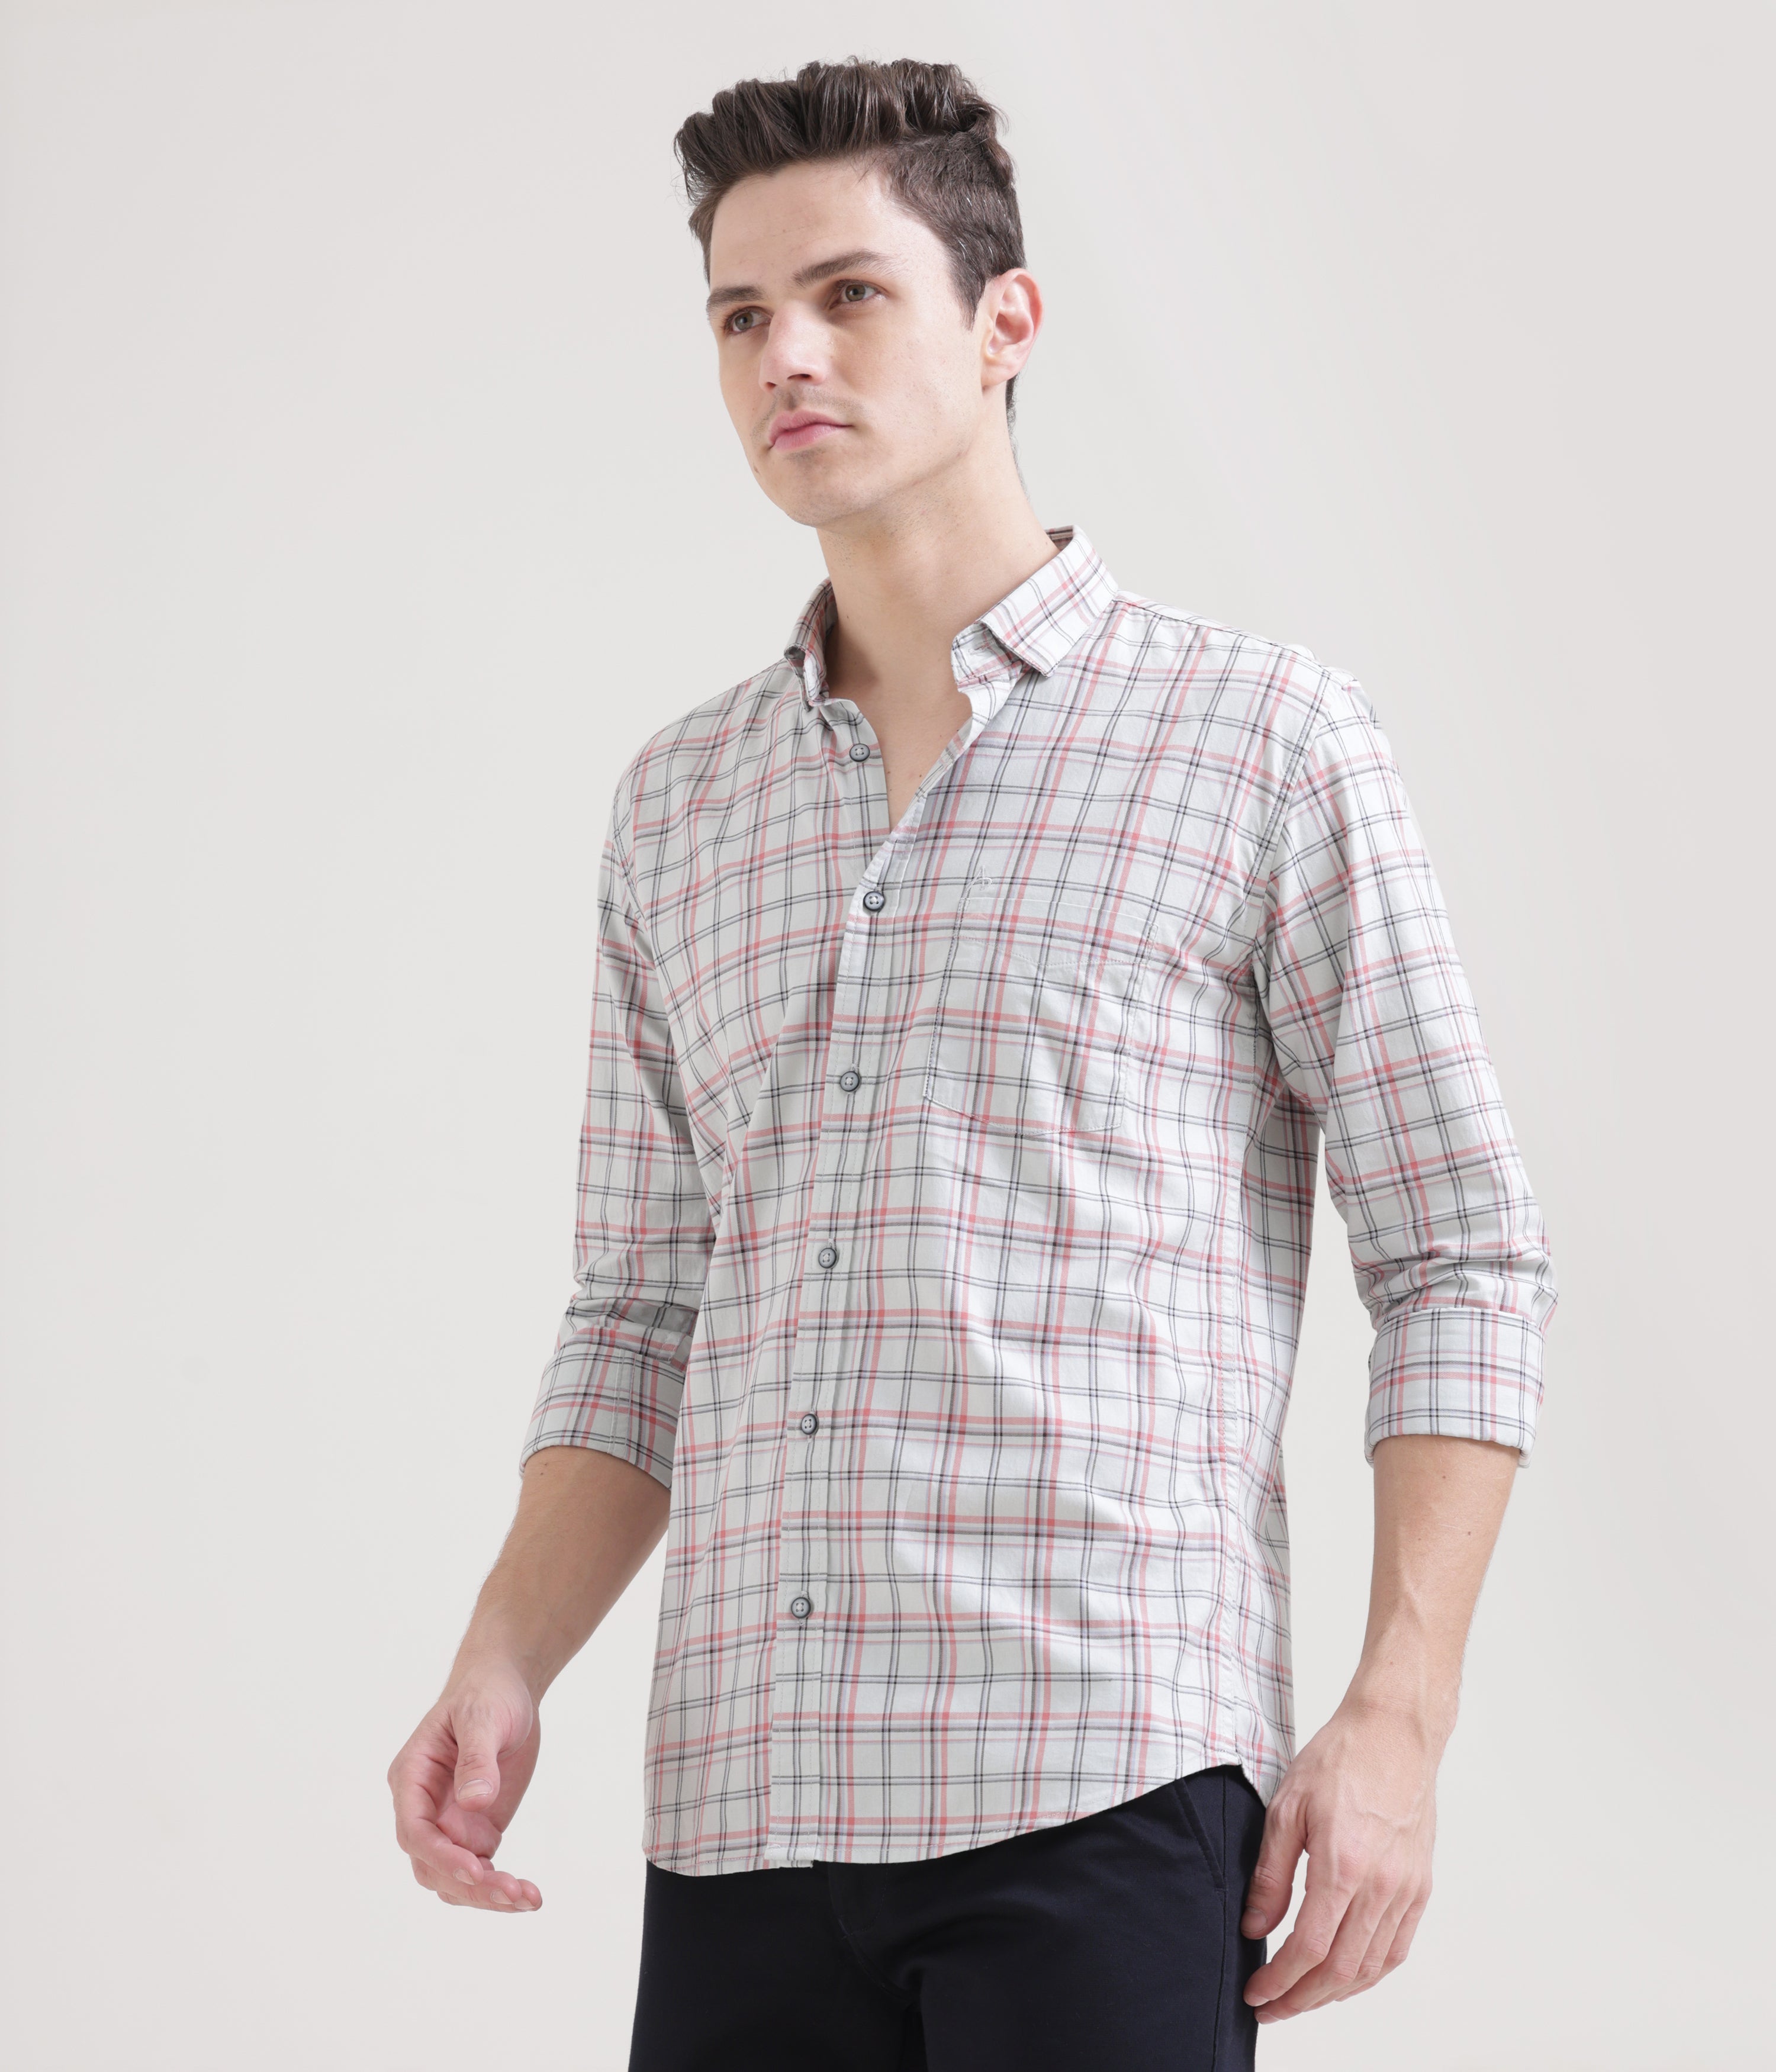 Sea Salt Slim Fit Shirt: Versatile Elegance